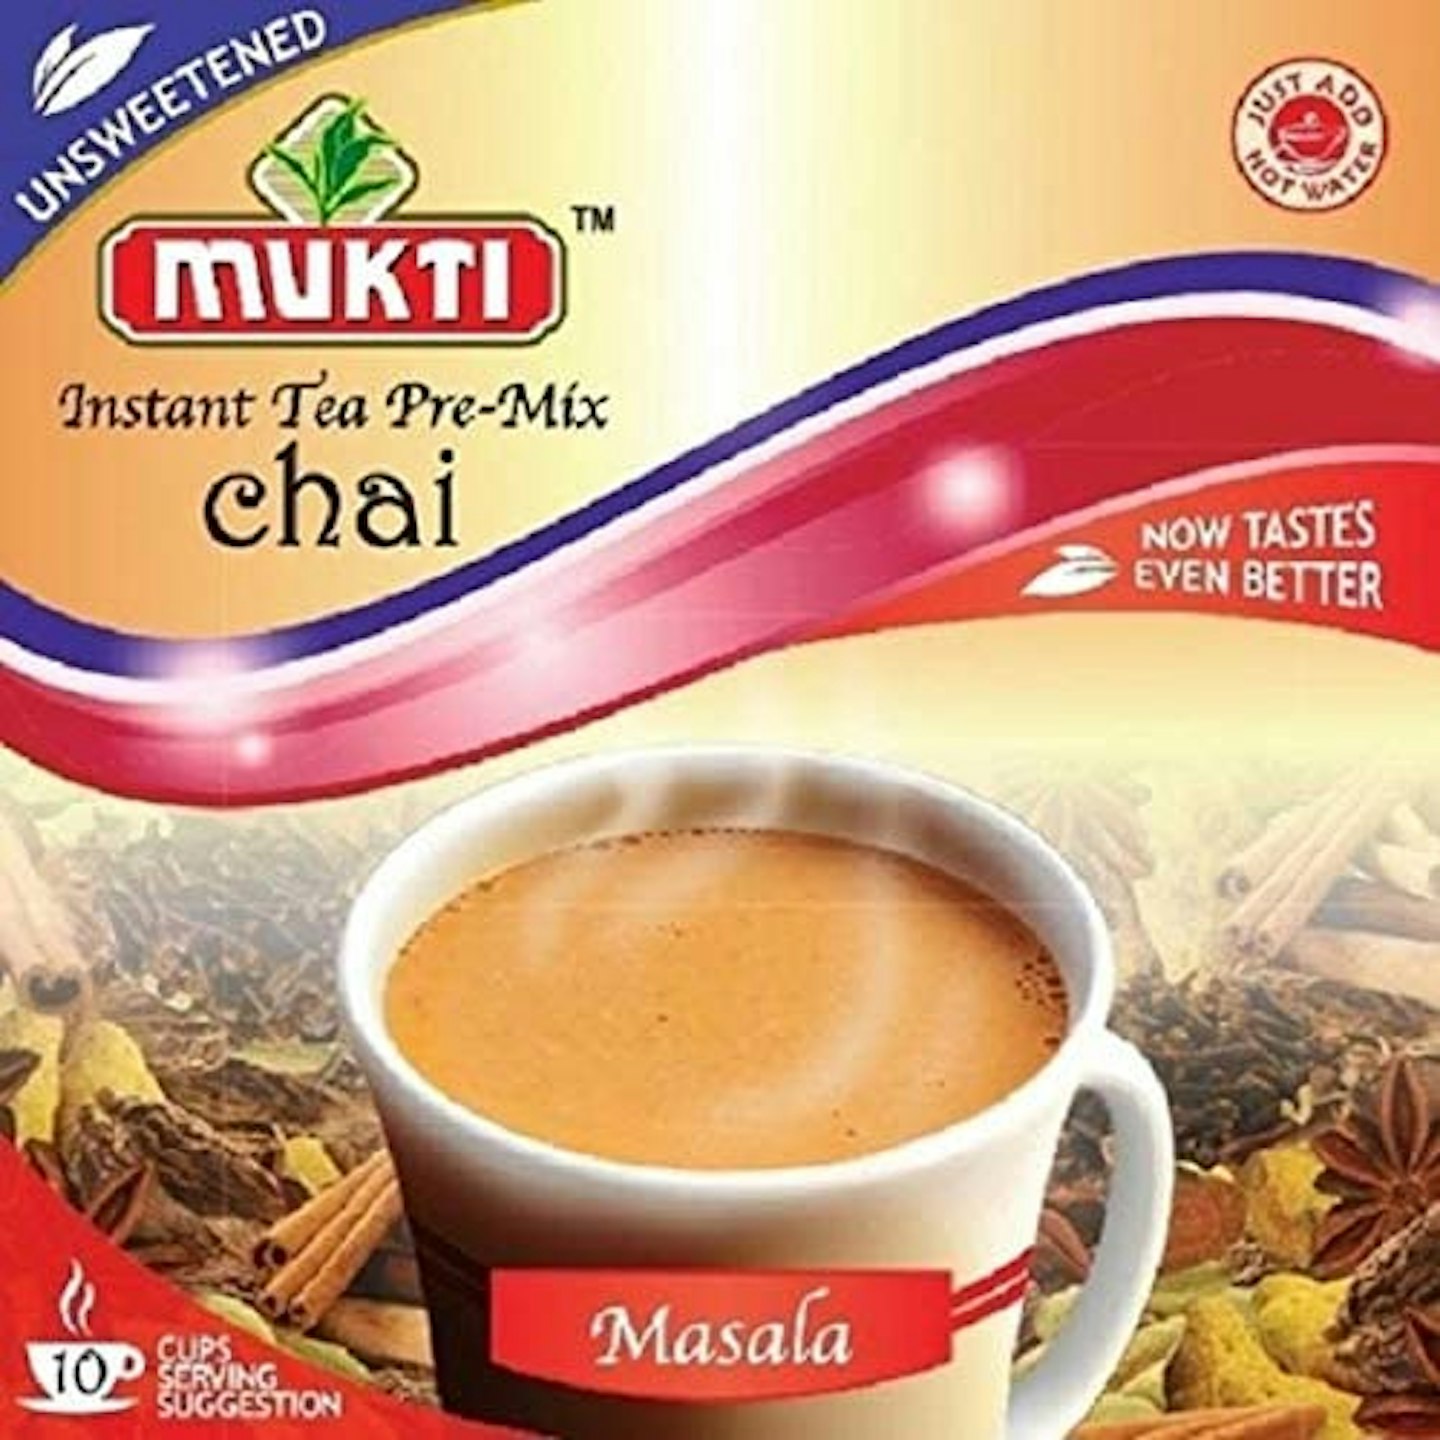  Mukti Instant Tea Pre-Mix Chai Masala Unweetened (10)